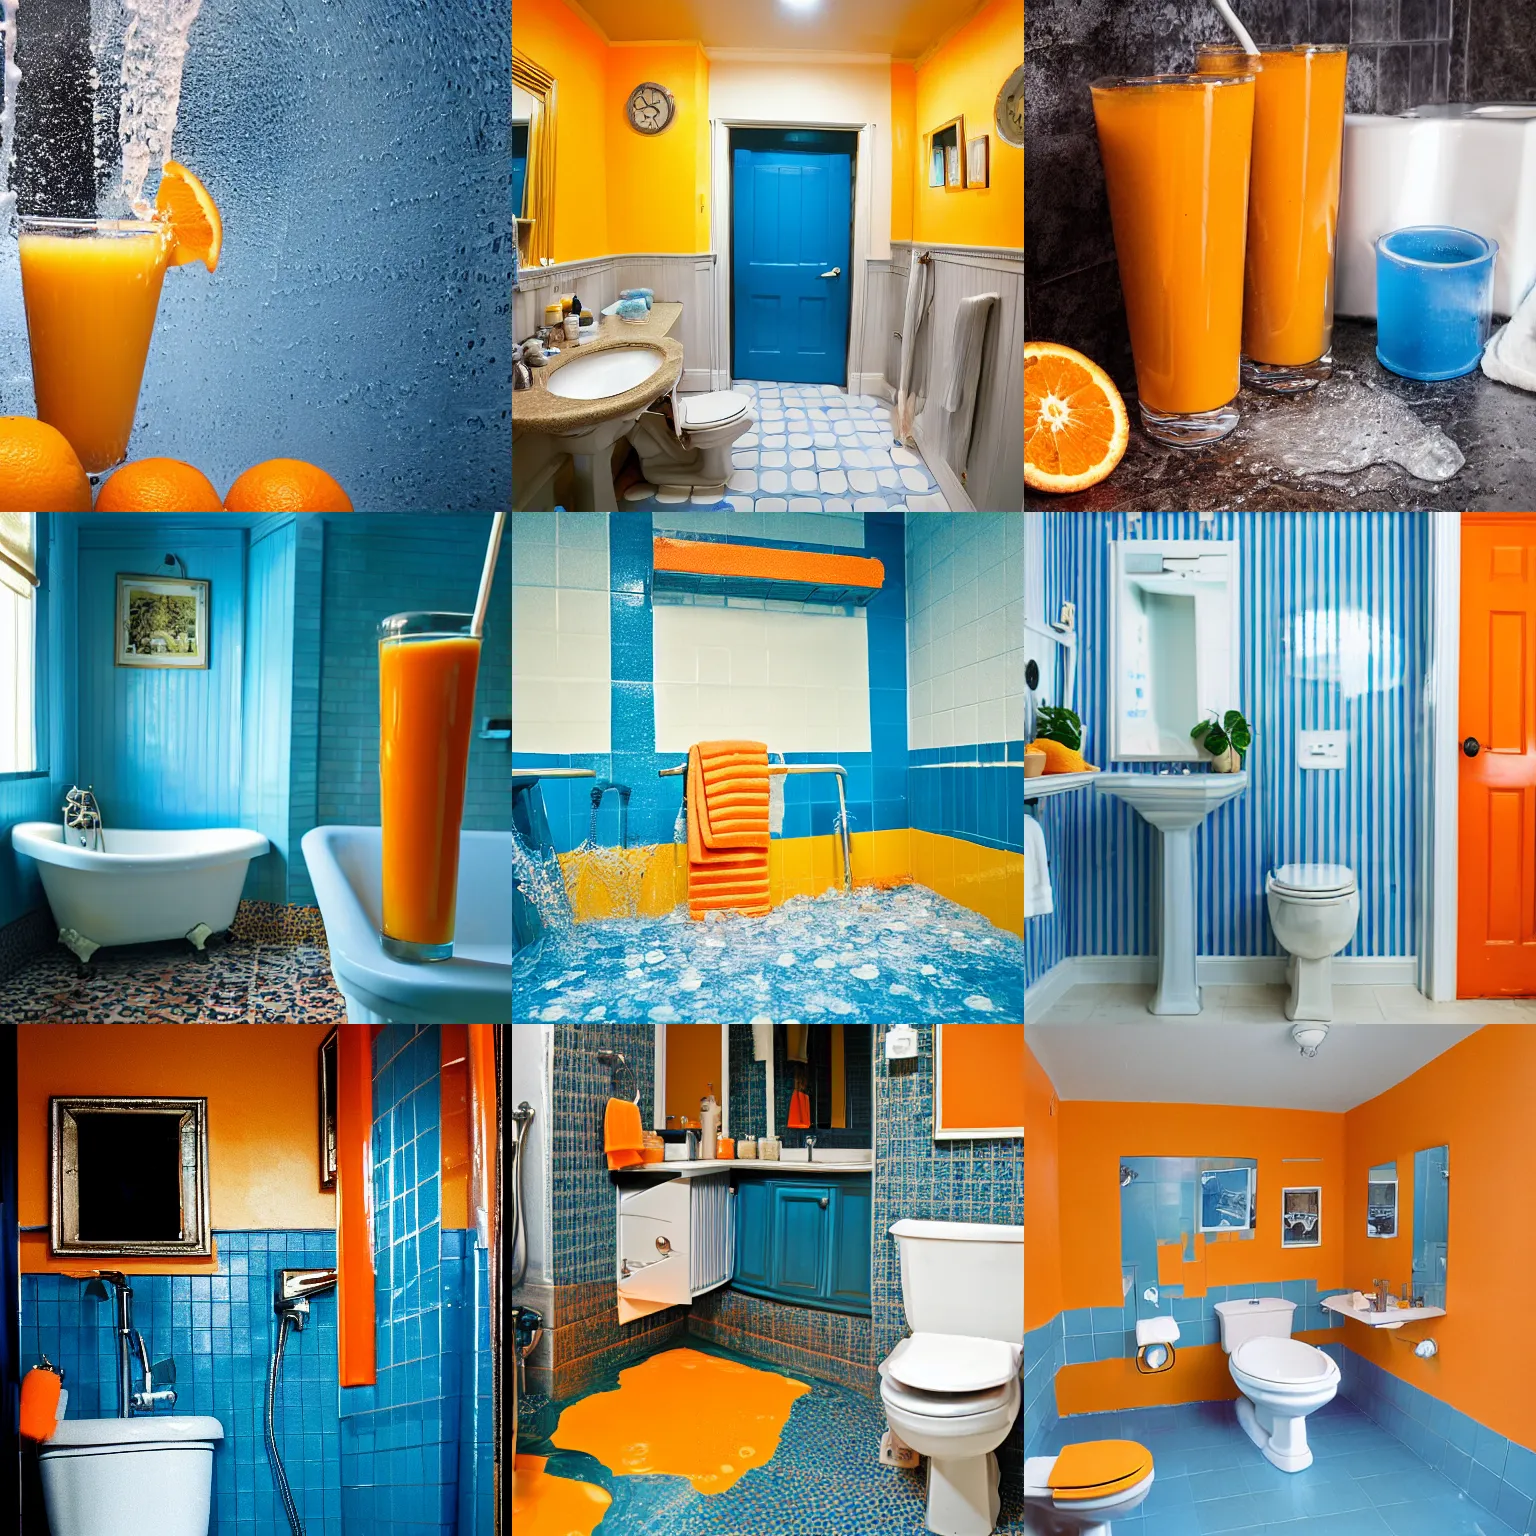 Prompt: dirty blue bathroom flooded with orange juice, knee high orange juice flood, photograph